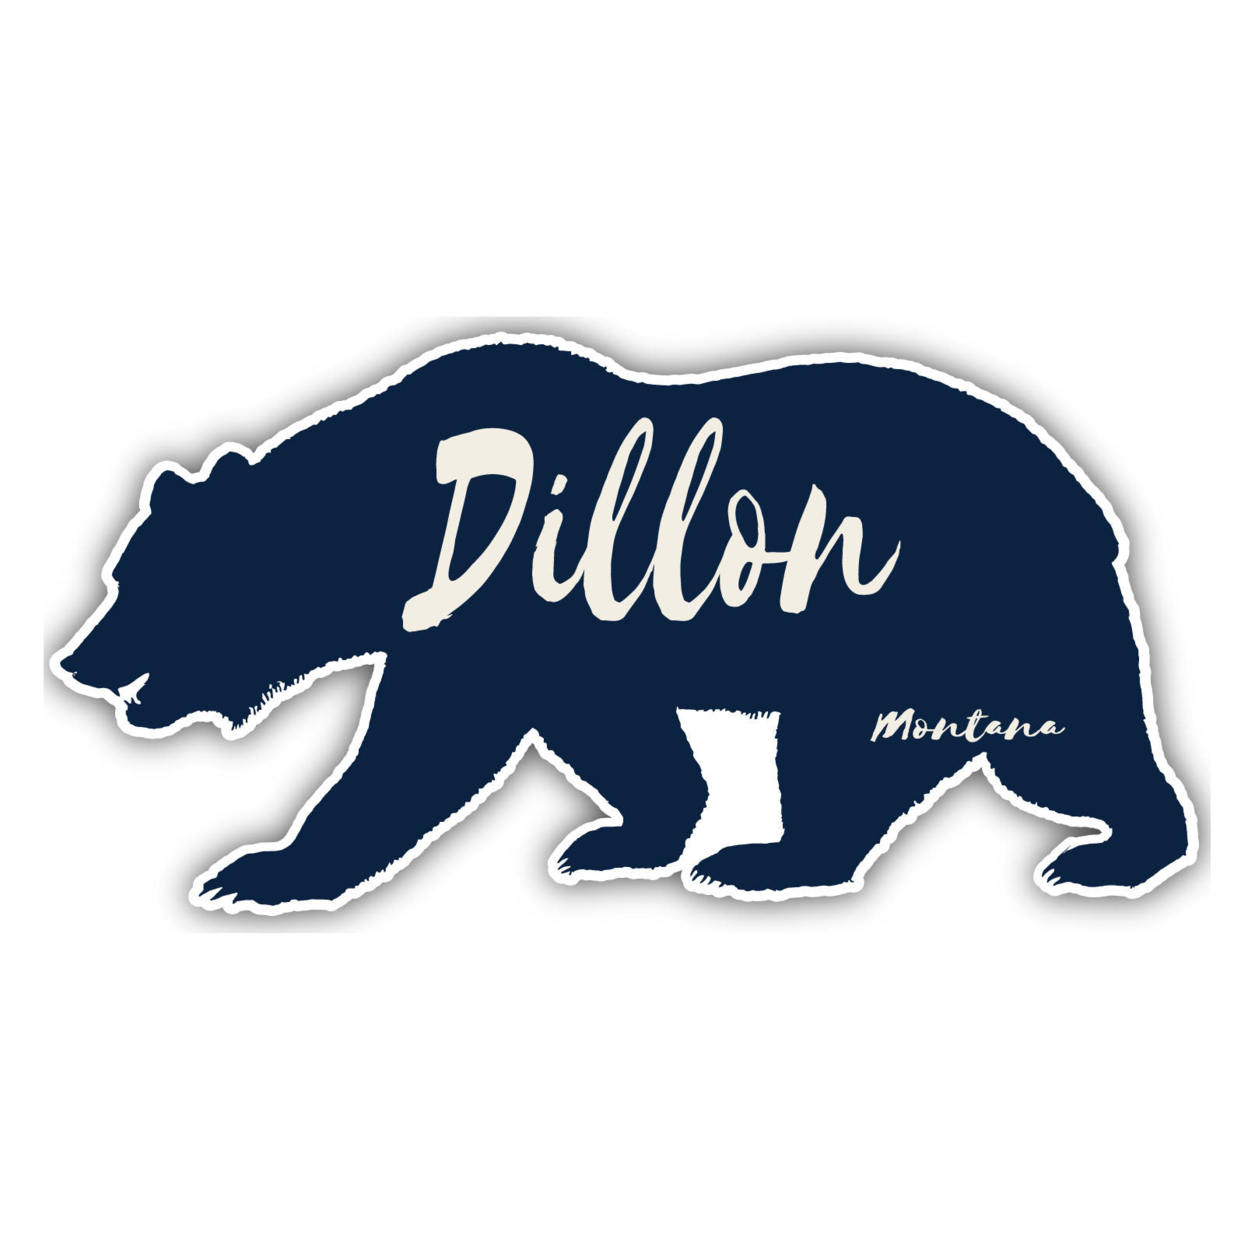 Dillon Montana Souvenir Decorative Stickers (Choose Theme And Size) - 4-Pack, 6-Inch, Bear